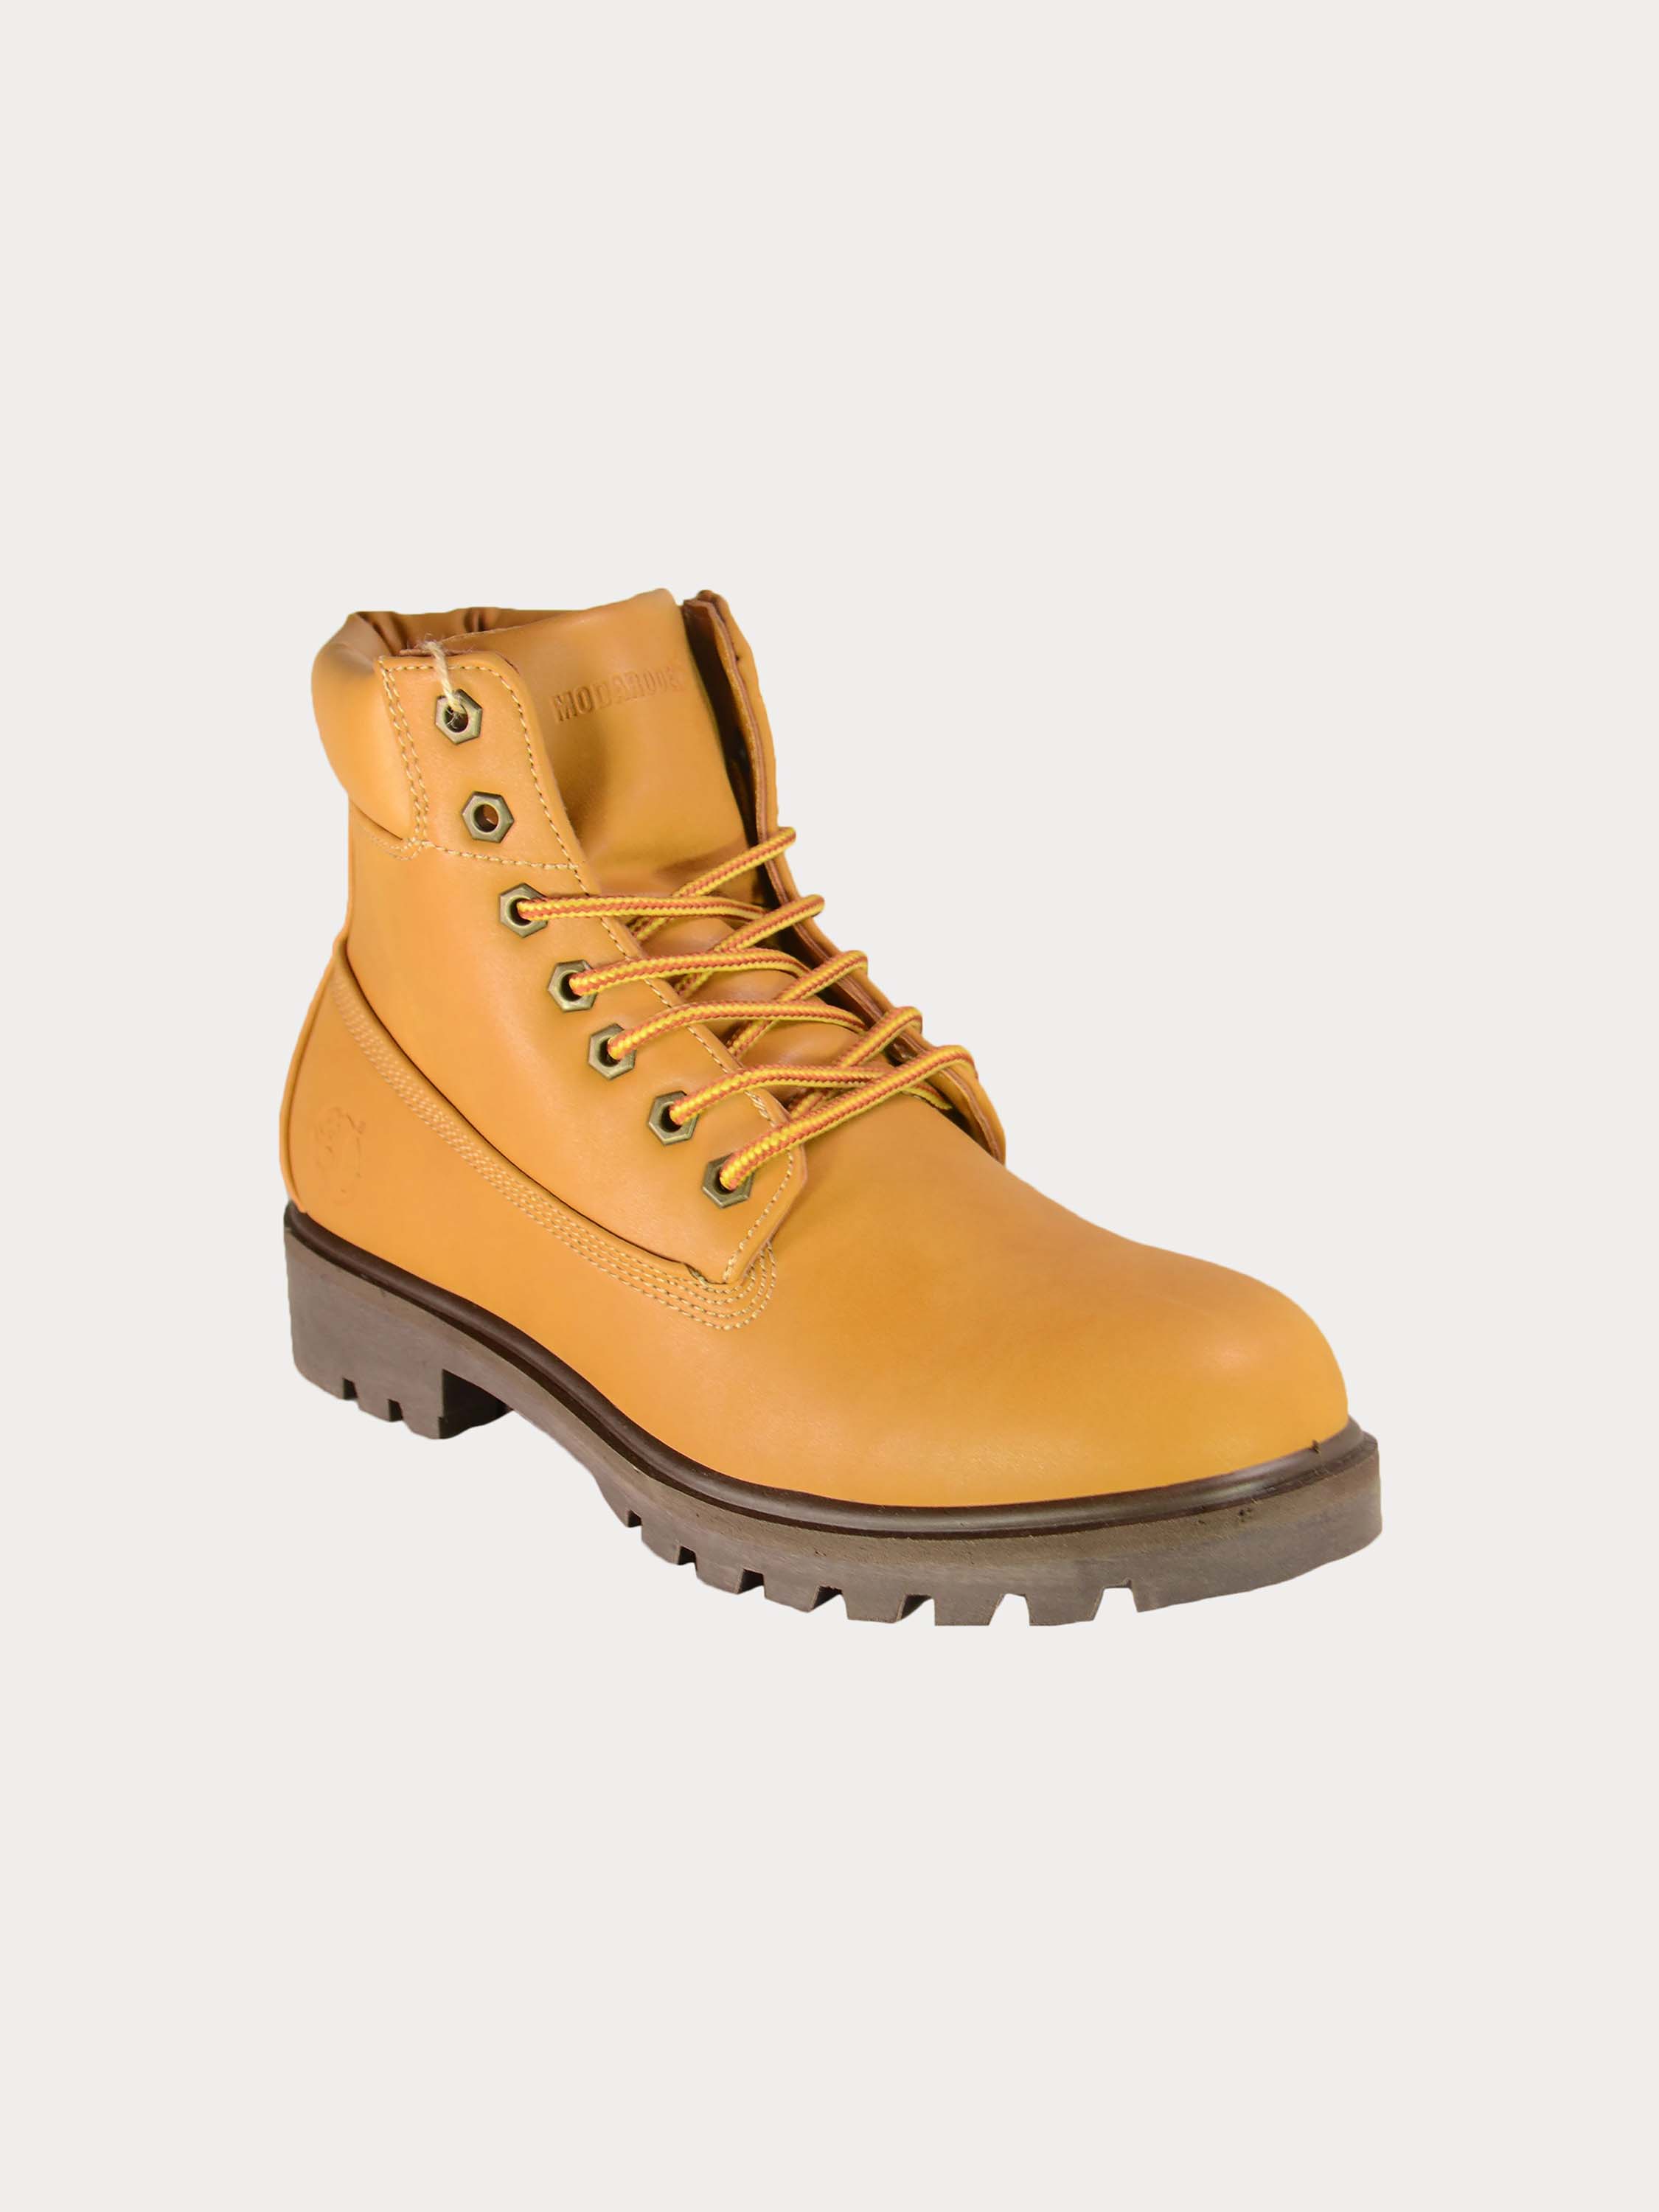 Modarodeo 027018 Men's Ankle Boots #color_Tan